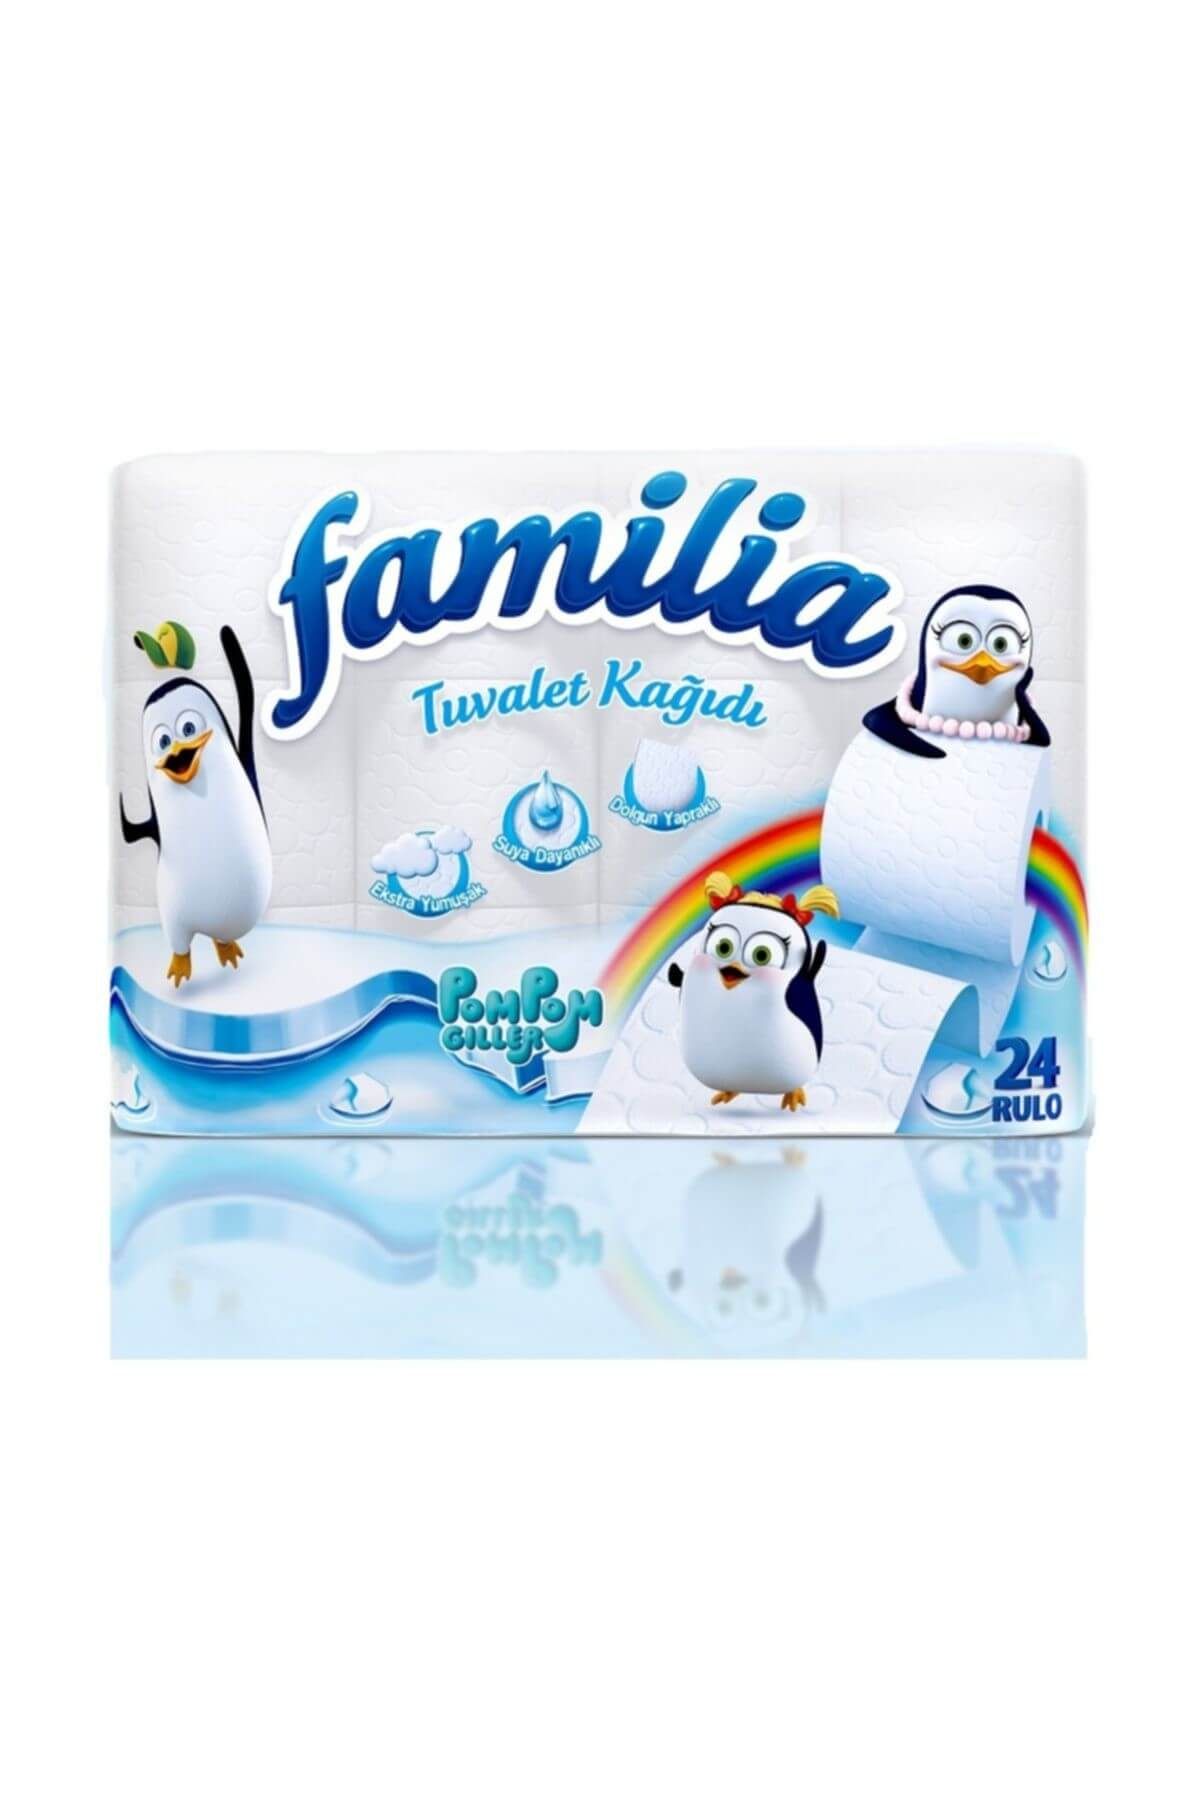 Familia Tuvalet Kağıdı 24'lü